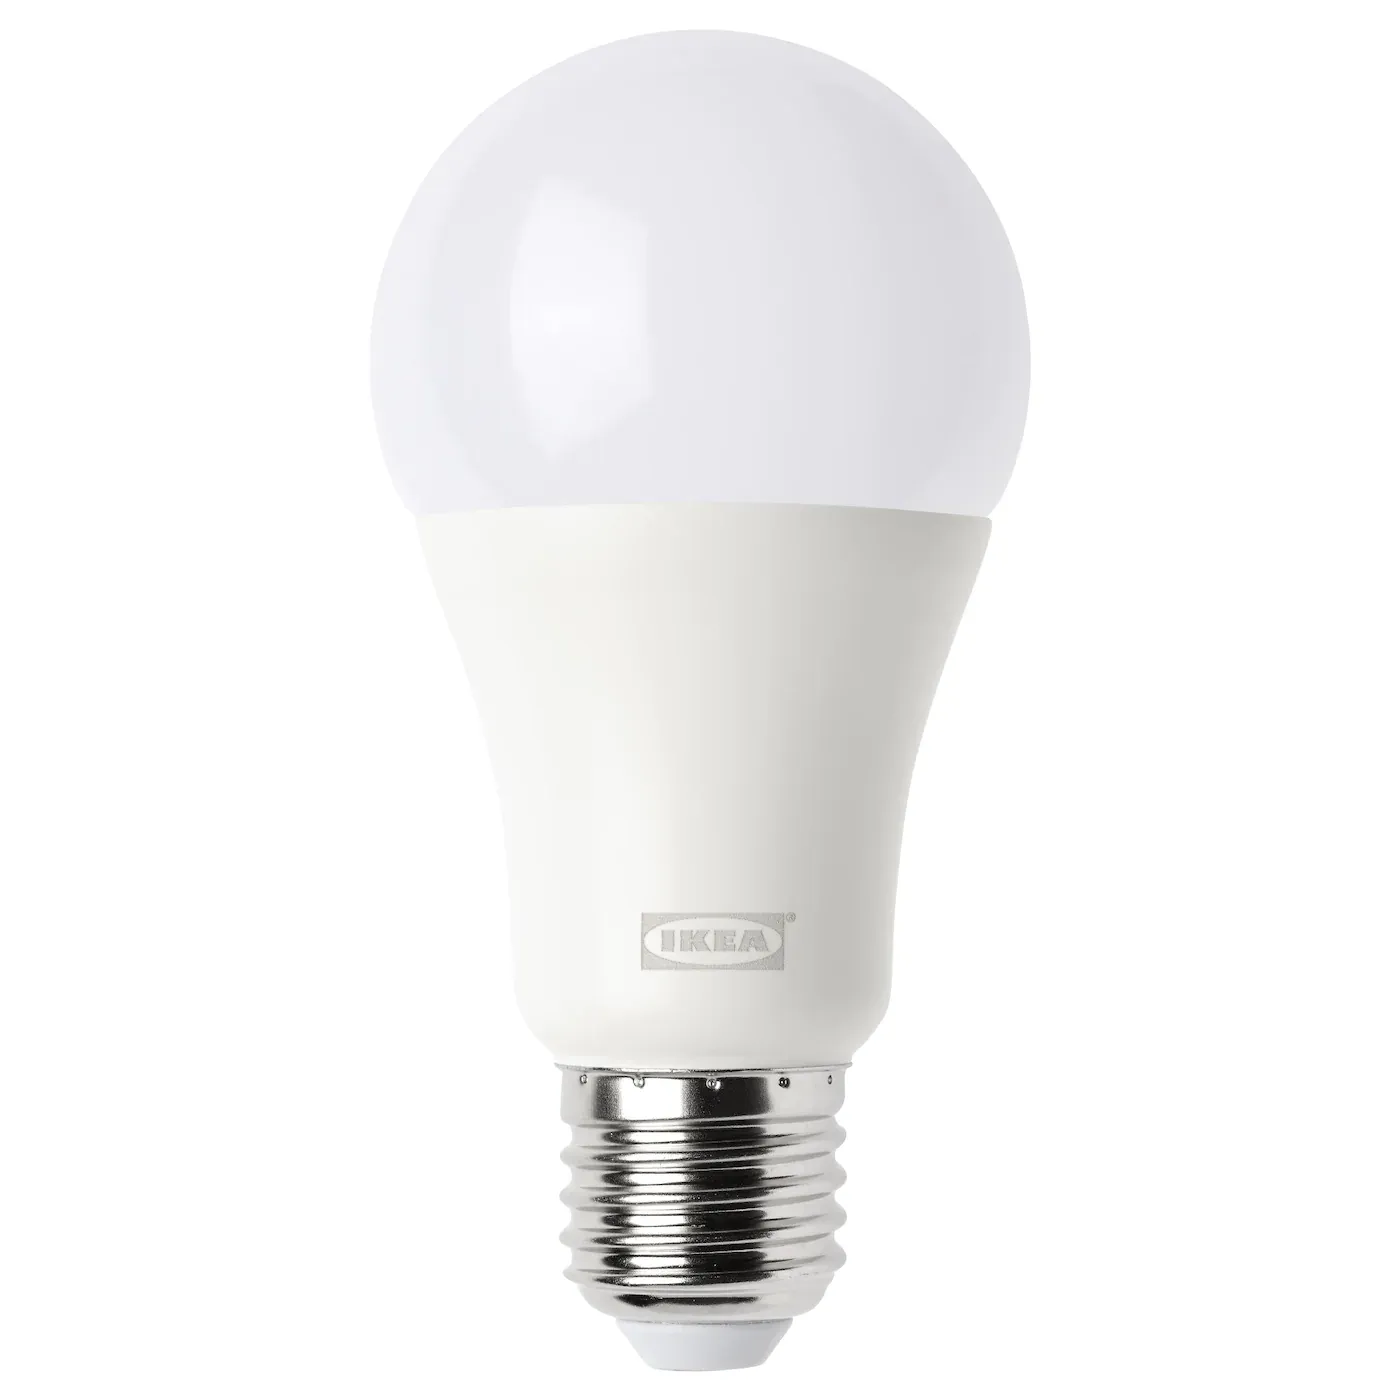 Tradfri LED bulb E27 1000 lumen, dimmable warm white globe opal white